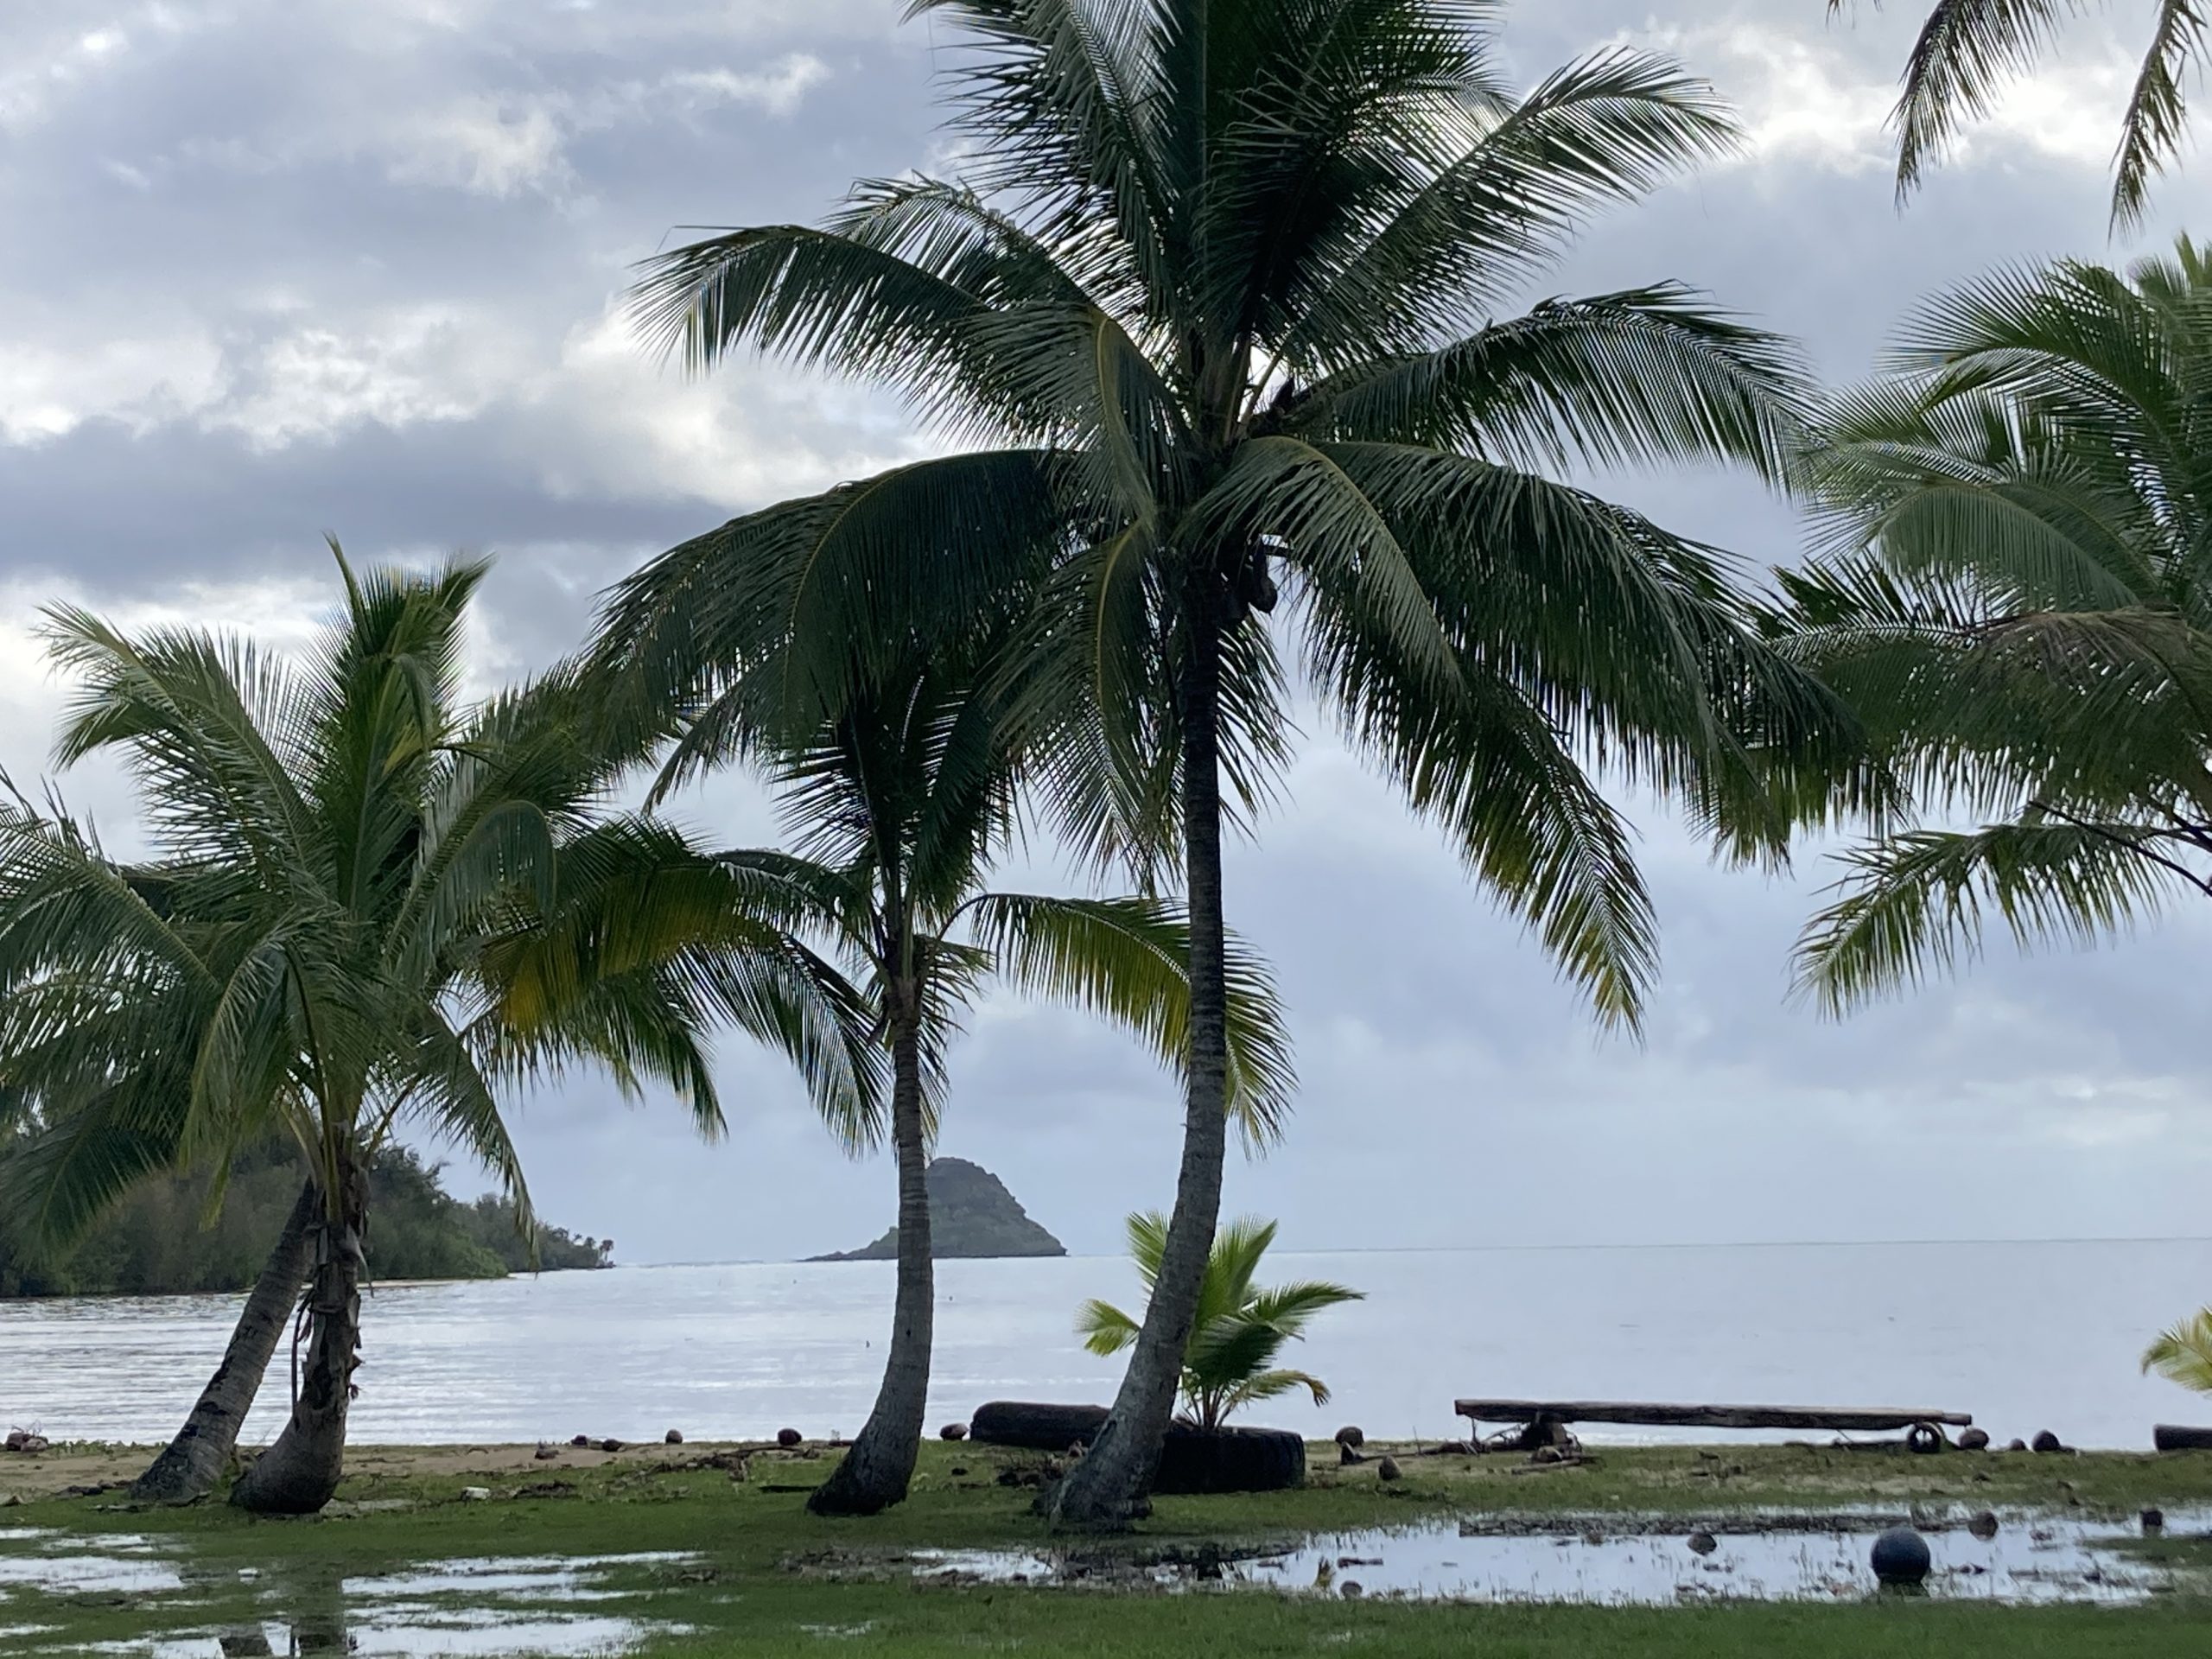 Shoreline of Hakipuʻu with a view of Mokoliʻi